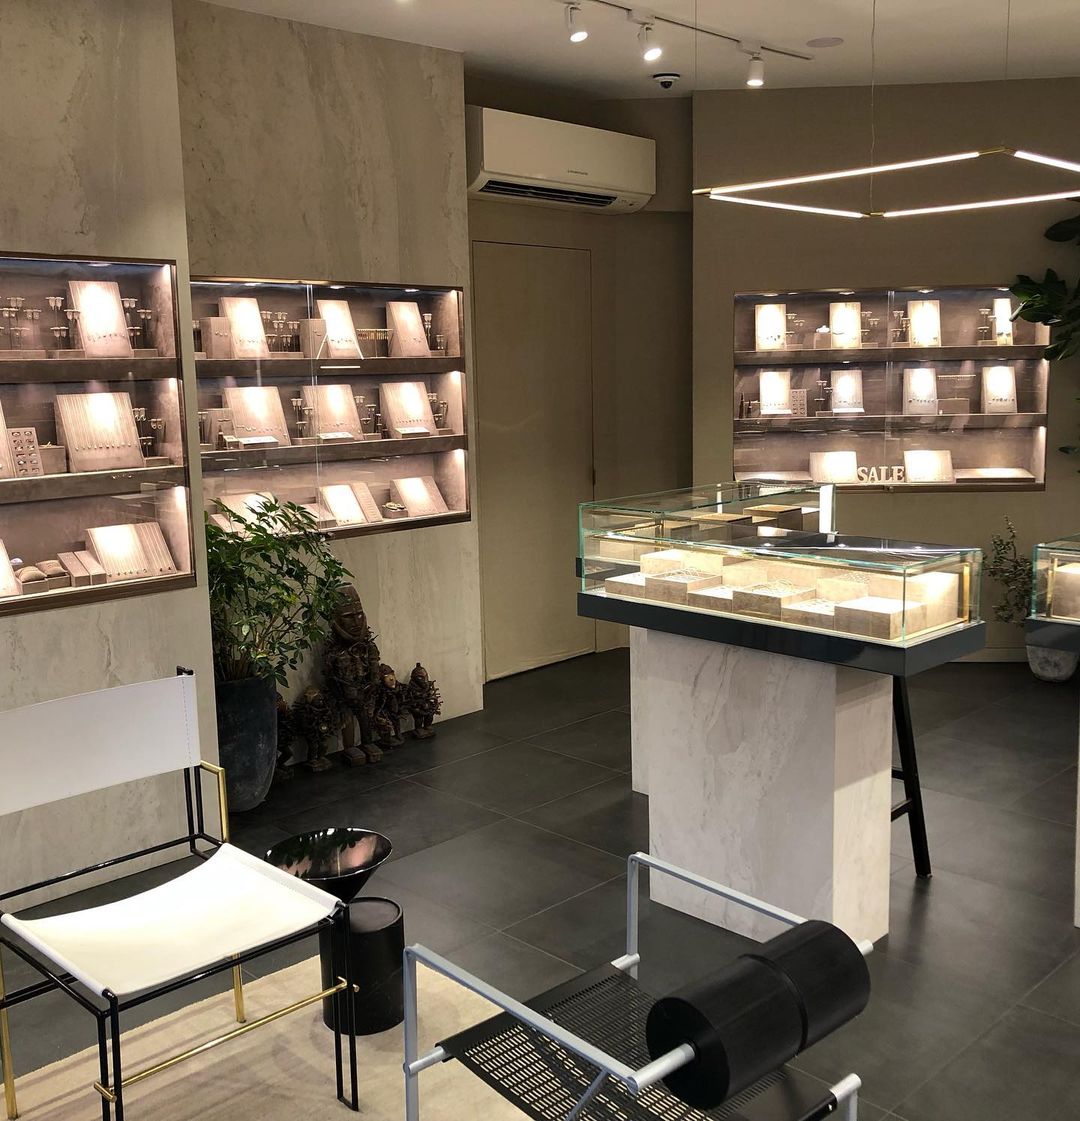 Elegant West Village jewelry store - luxurious displays in New York boutique interior